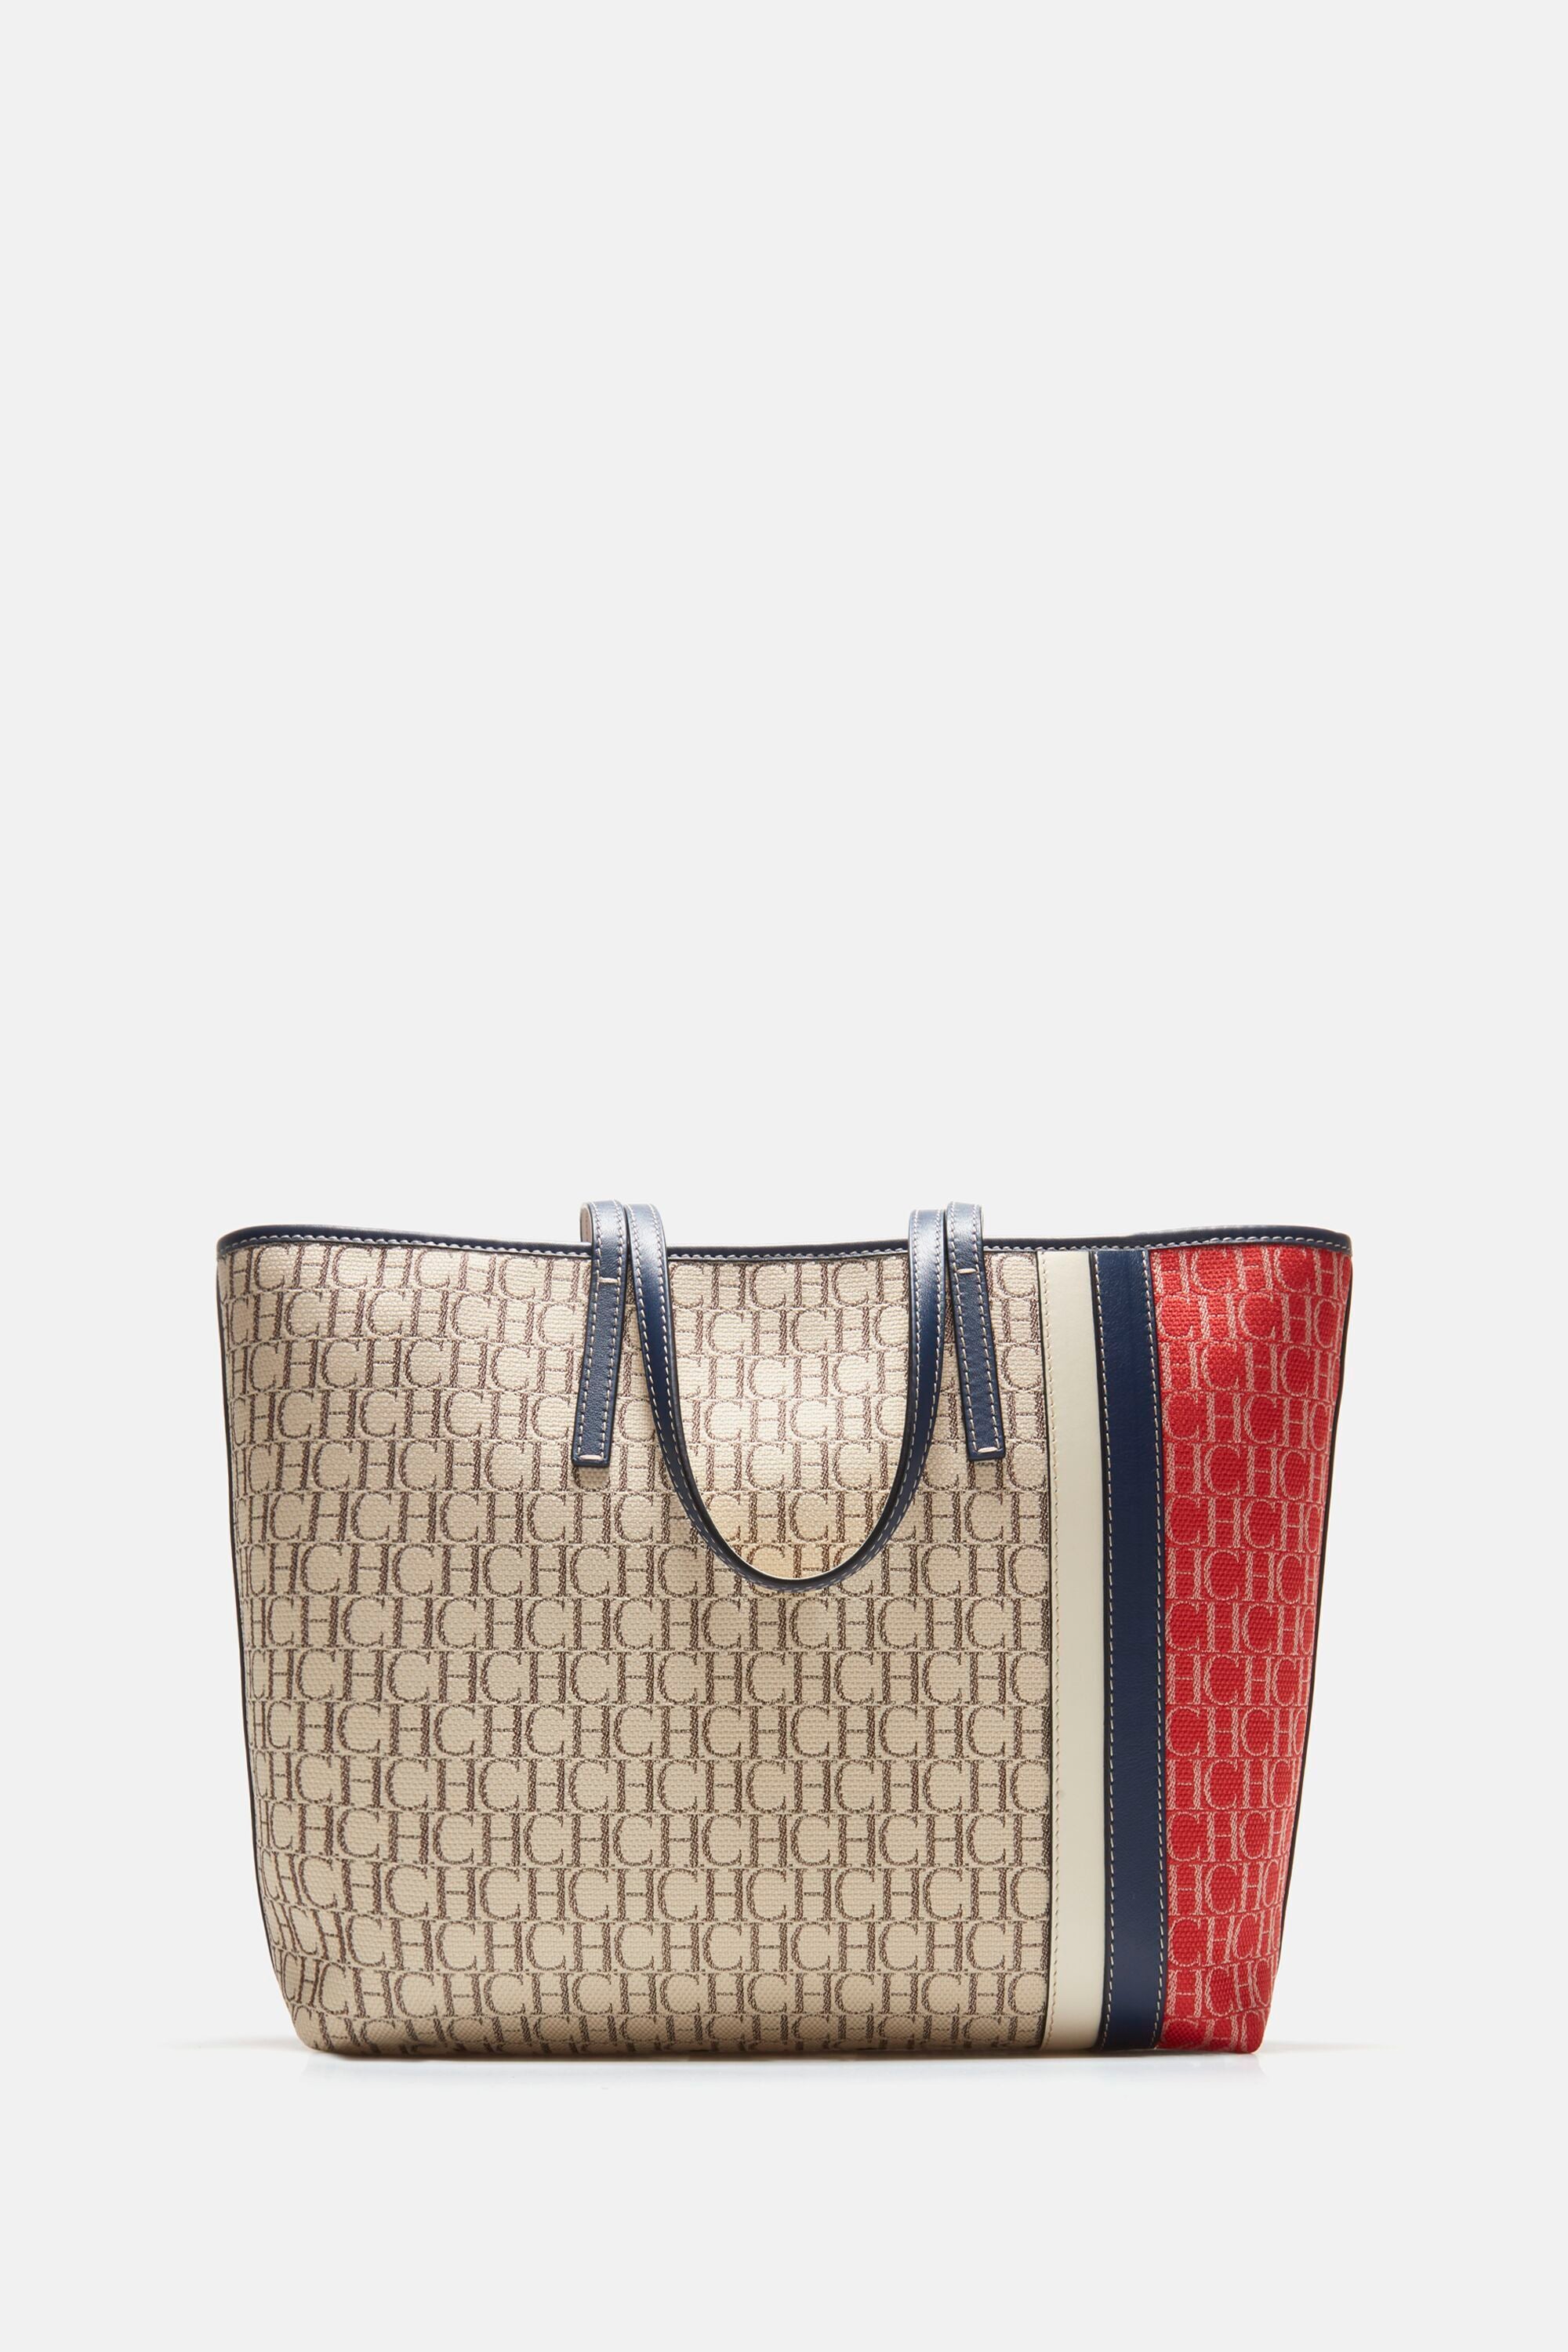 Buy Preowned  Brand new Luxury Carolina Herrera Red Flap Shoulder Bag  Online  LuxepolisCom